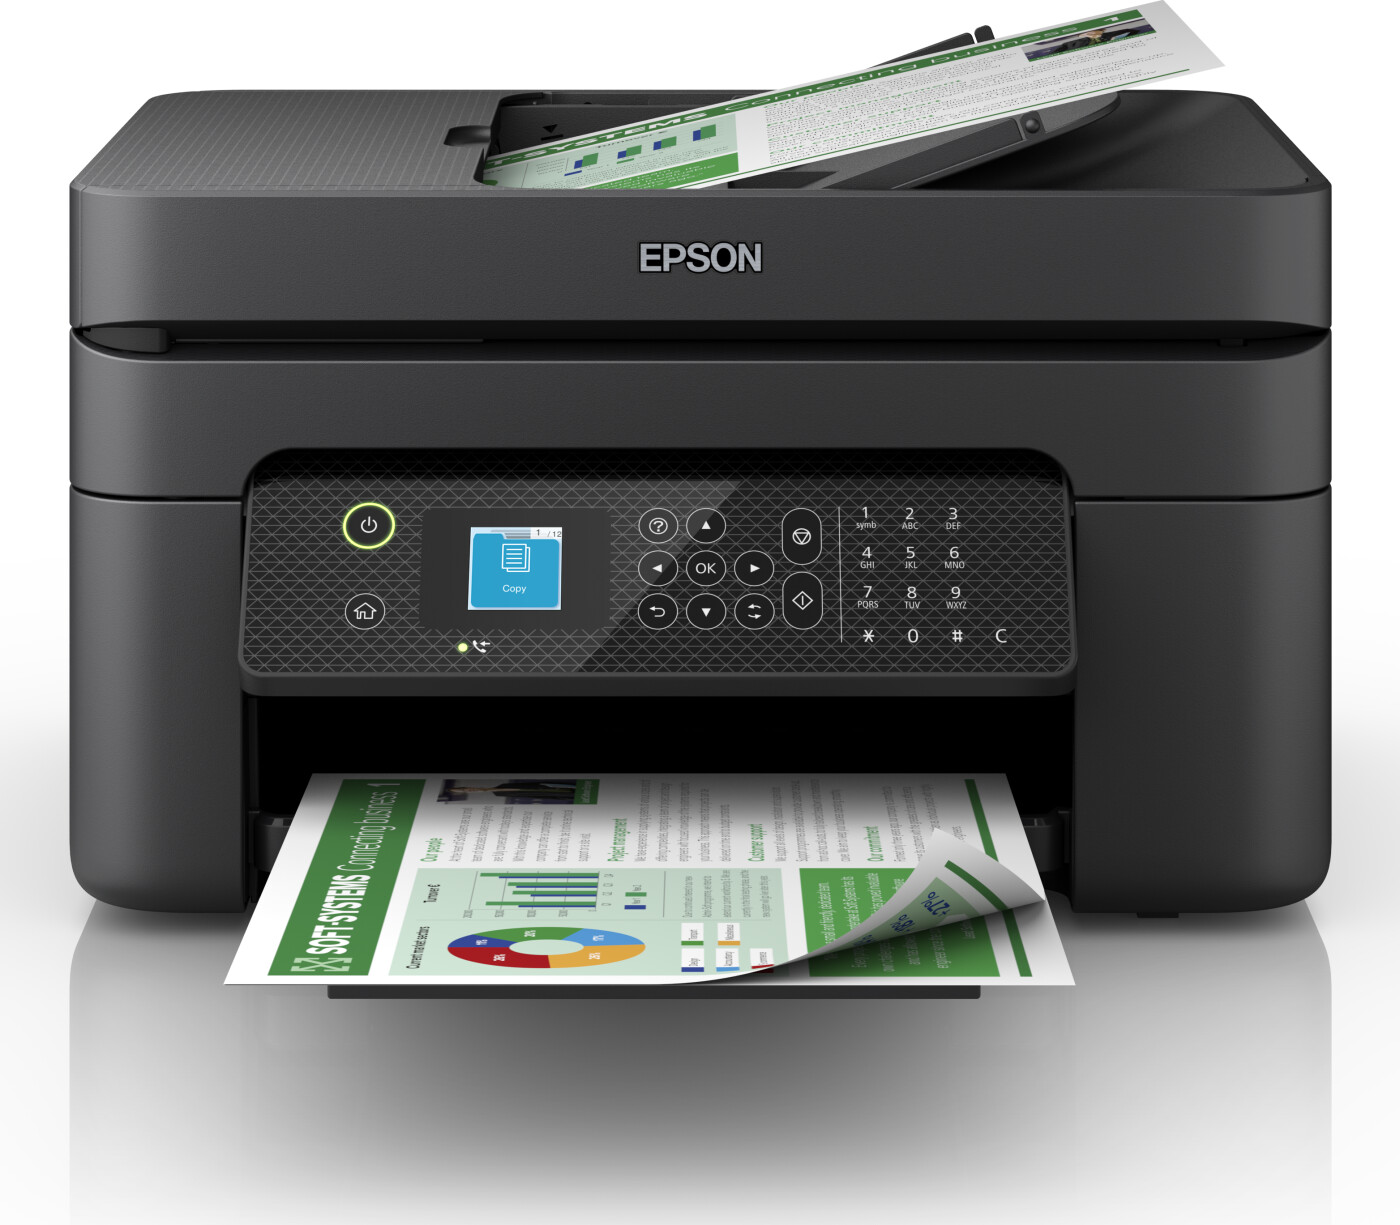 Billede af Epson Workforce - Aio Printer Med Wifi - 33 Spm - Wf-2930dwf